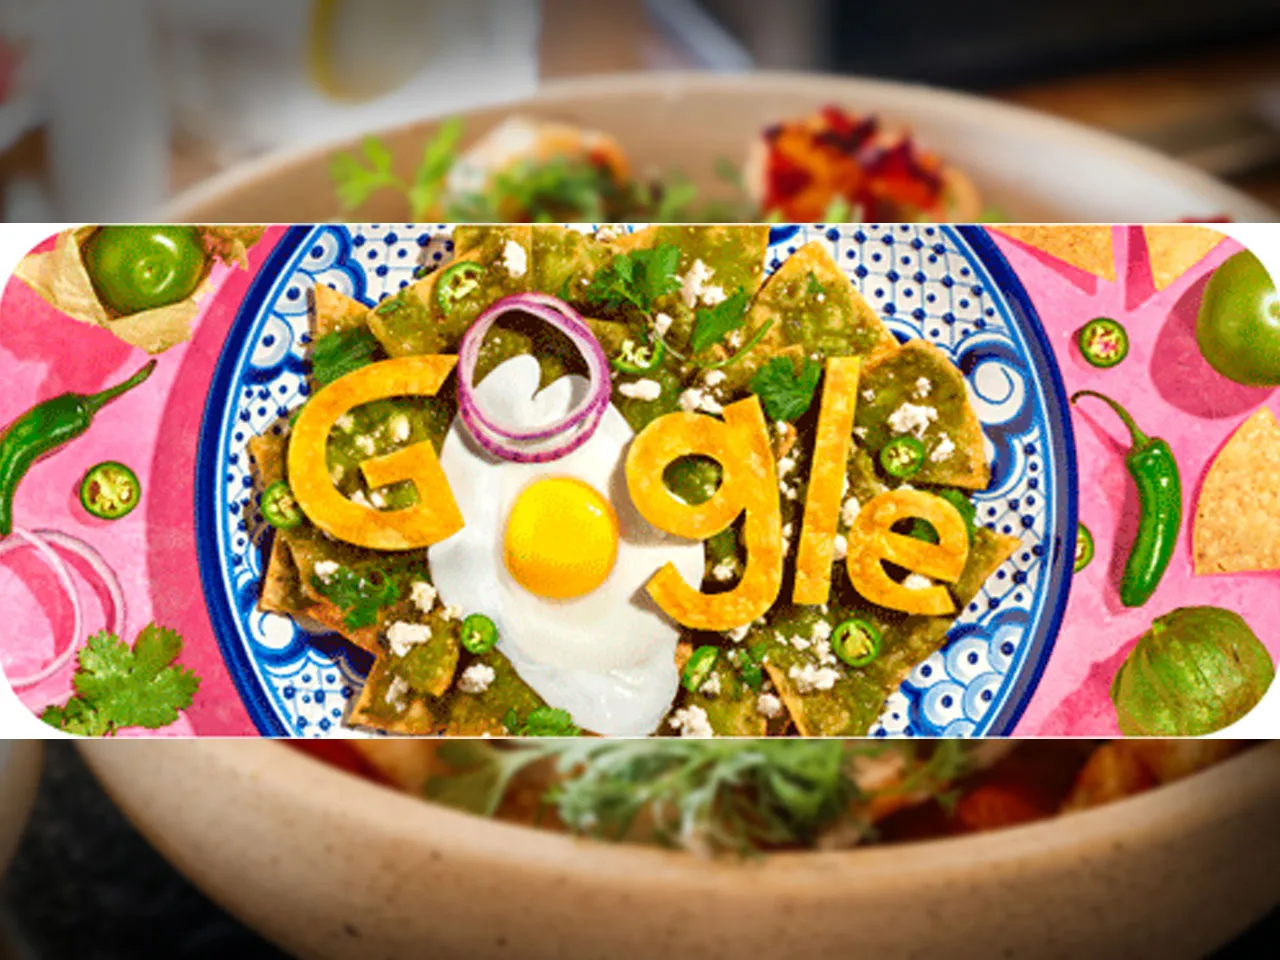 Conheça o prato típico mexicano homenageado pelo Google. Foto: Allan Francis / Unsplash